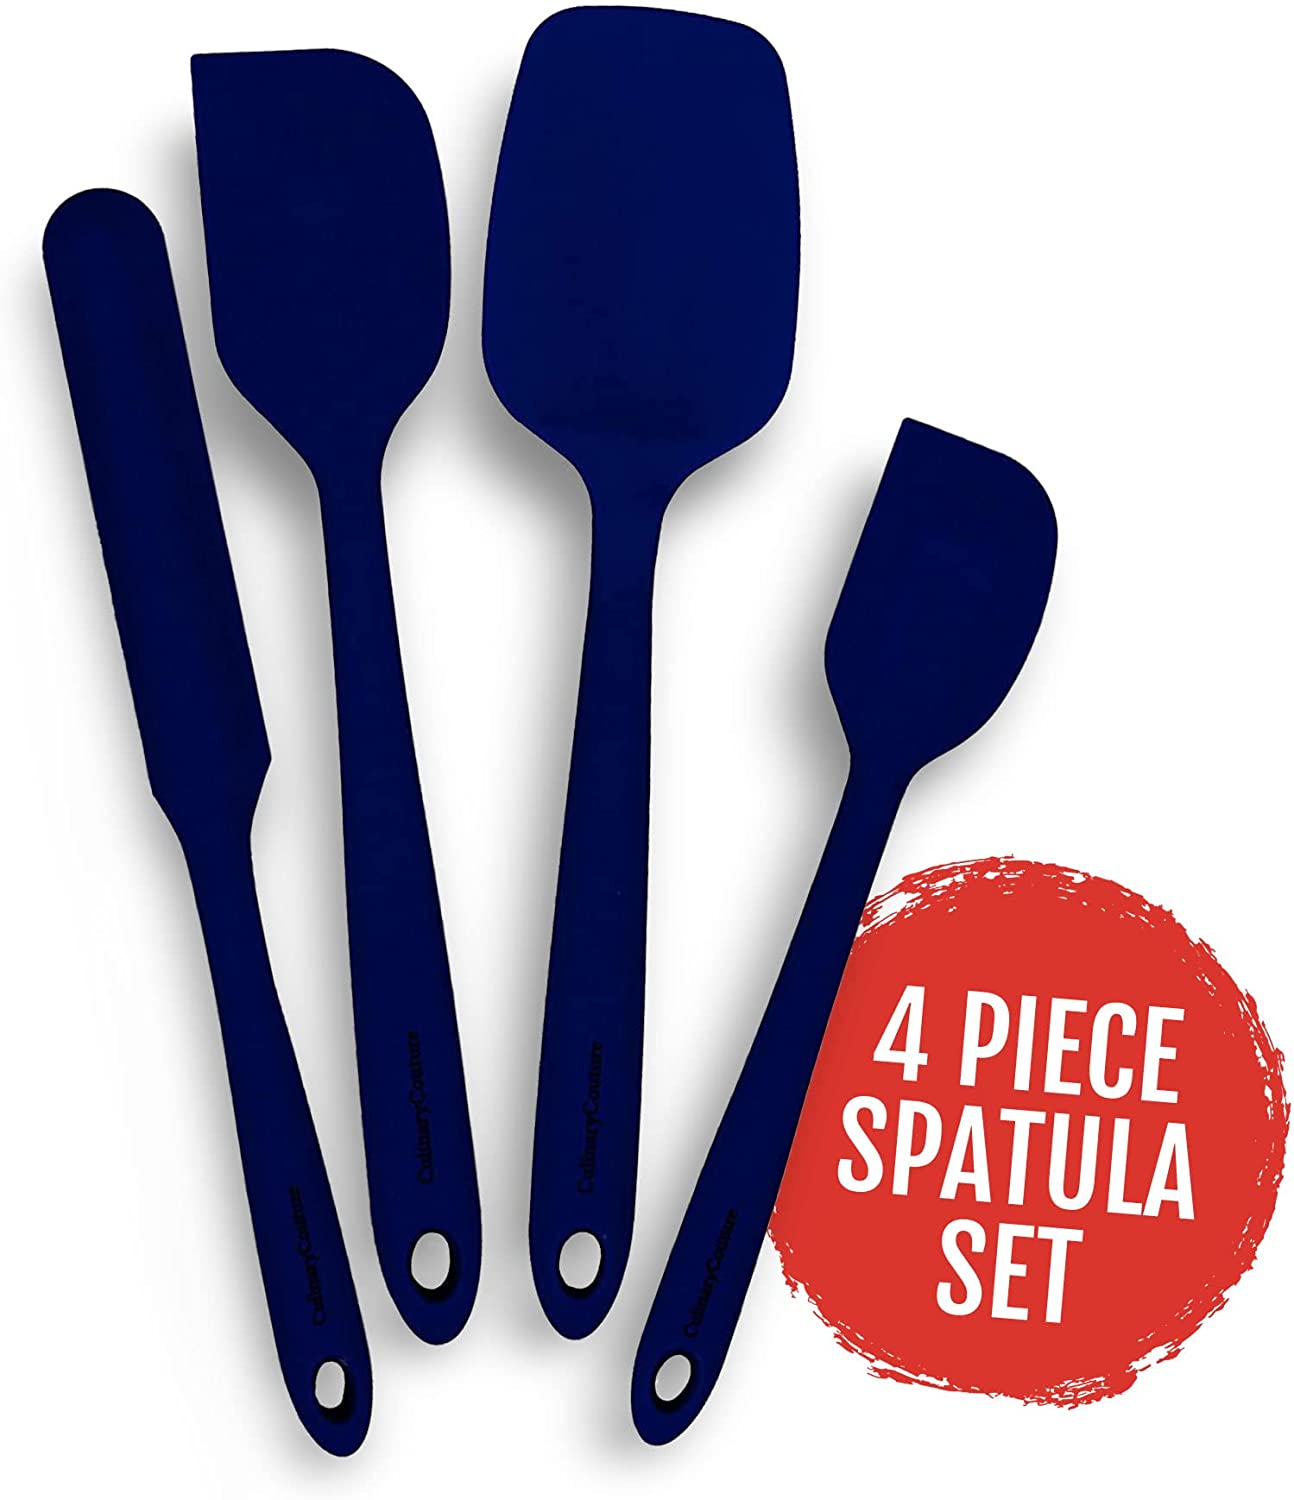 4 Piece Spatula Set